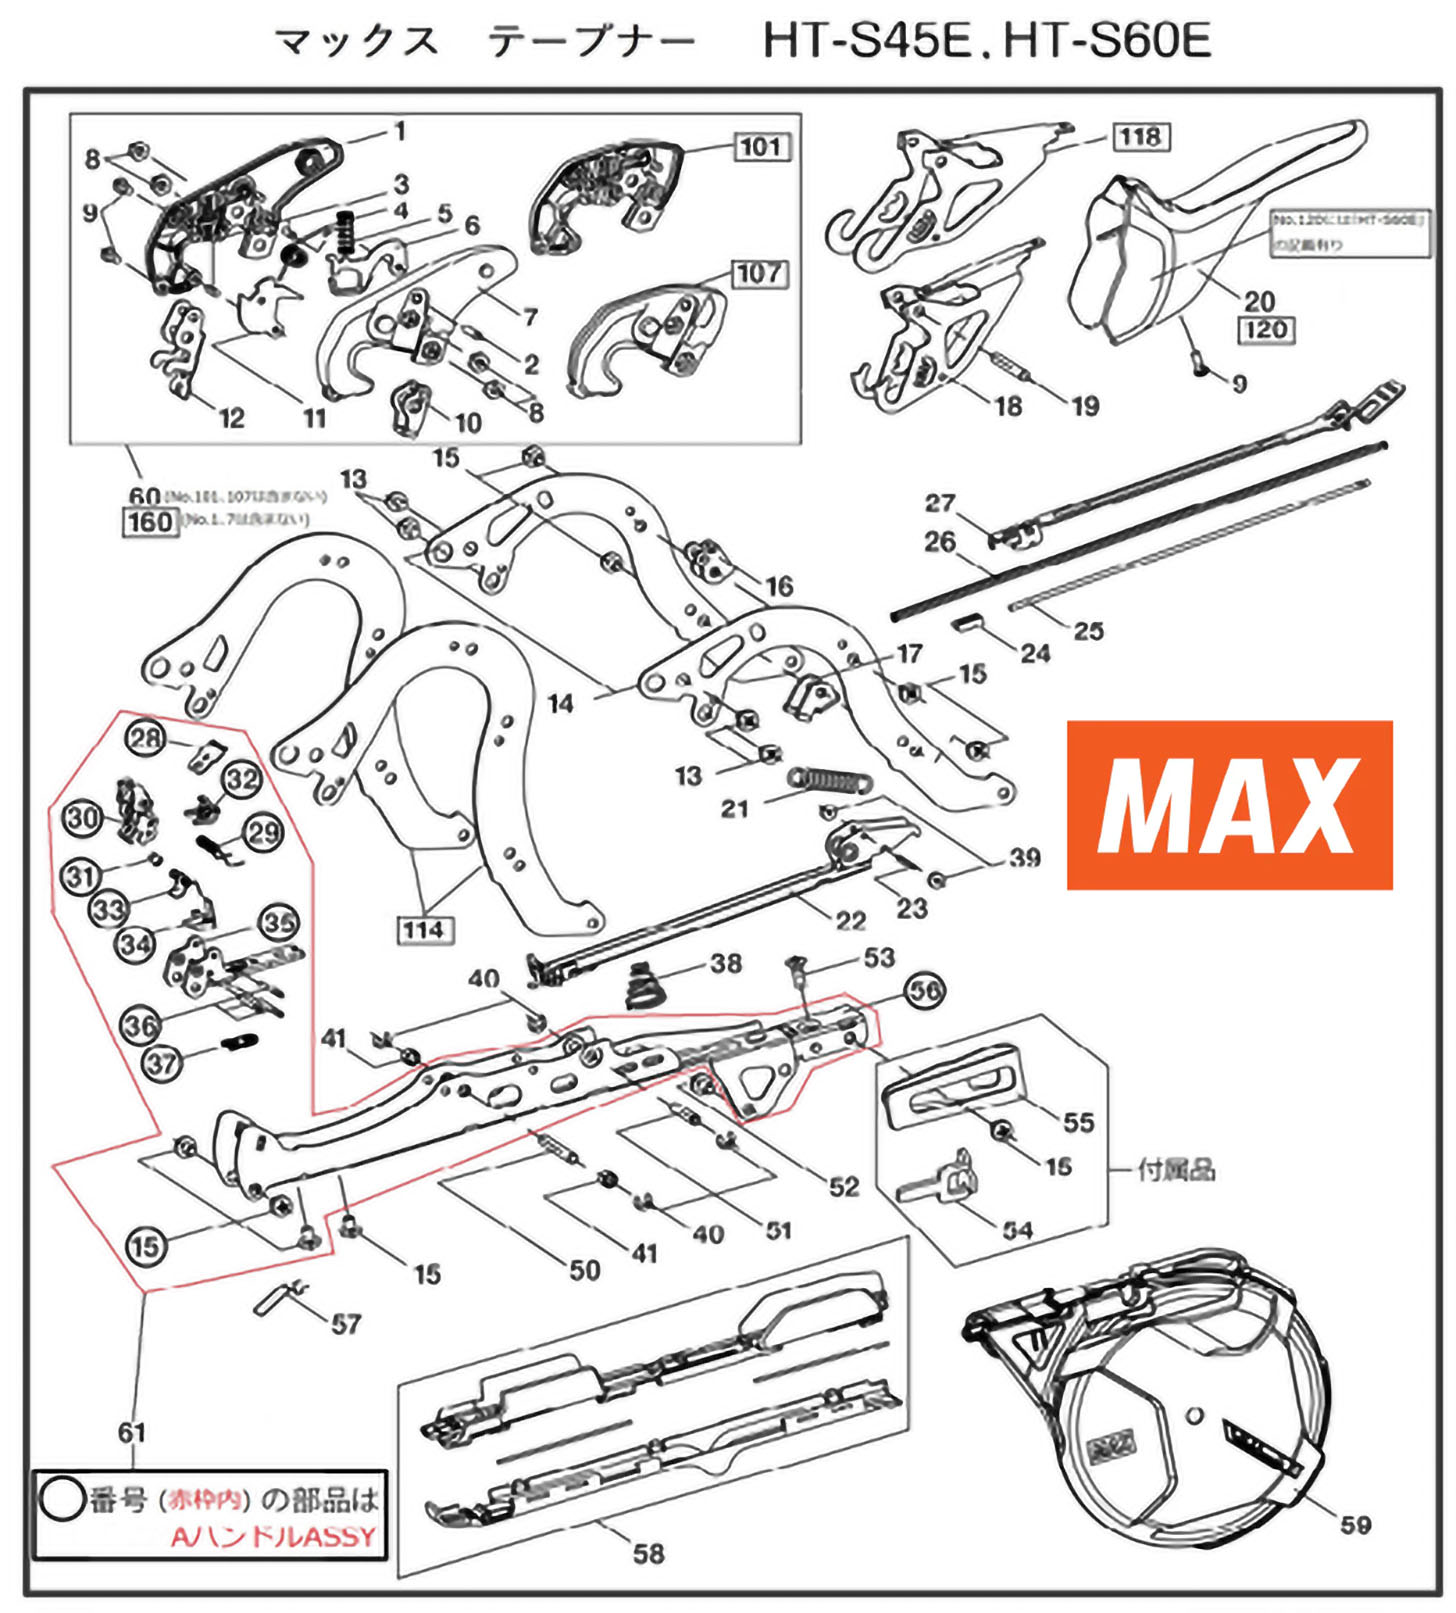 MAX Tapener Part HT11787 DRIVER (HT-S) Fits MAX HT-S45E #34